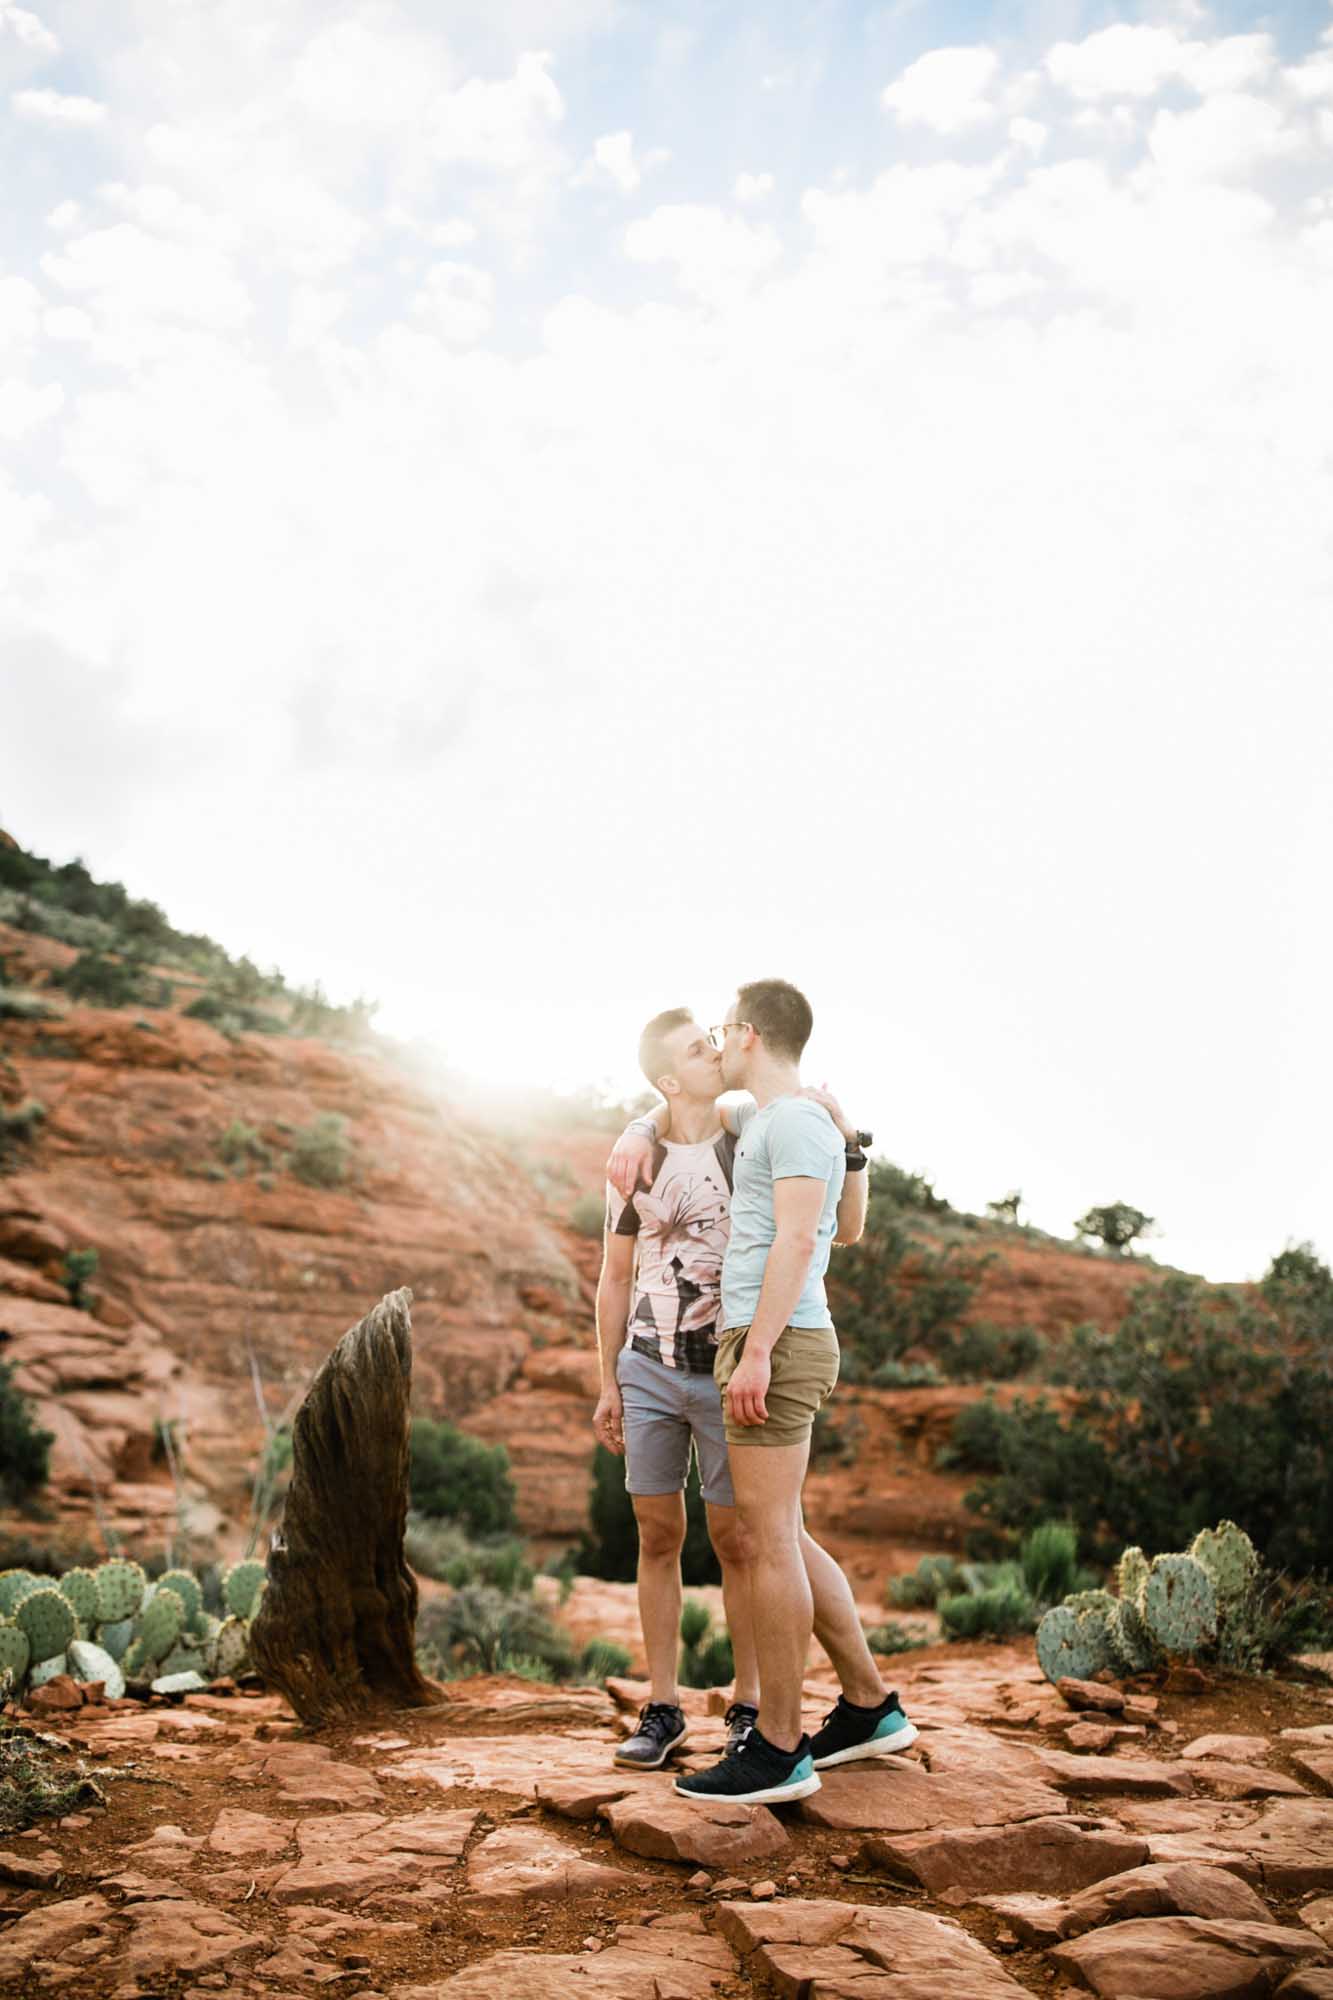 Breathtaking anniversary photo shoot in the Arizona desert | Aimée Flynn Photo | Featured on Equally Wed, the leading LGBTQ+ wedding magazine